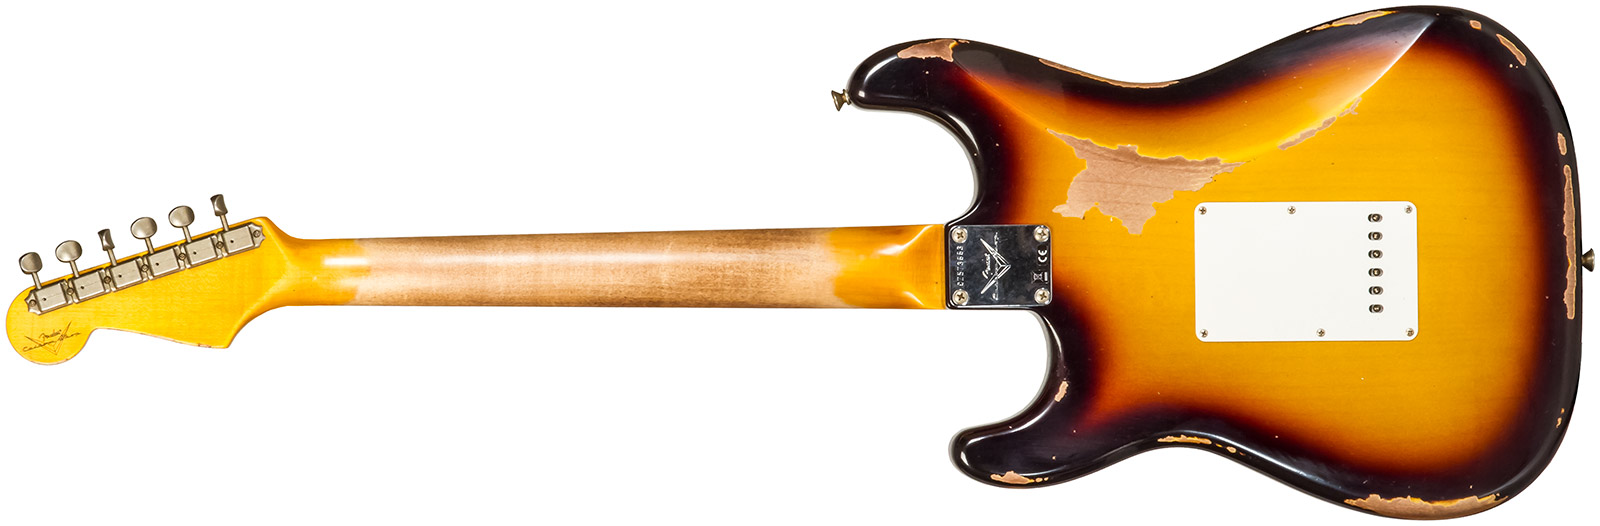 Fender Custom Shop Strat 1961 3s Trem Rw #cz573663 - Heavy Relic Aged 3-color Sunburst - Guitarra eléctrica con forma de str. - Variation 1